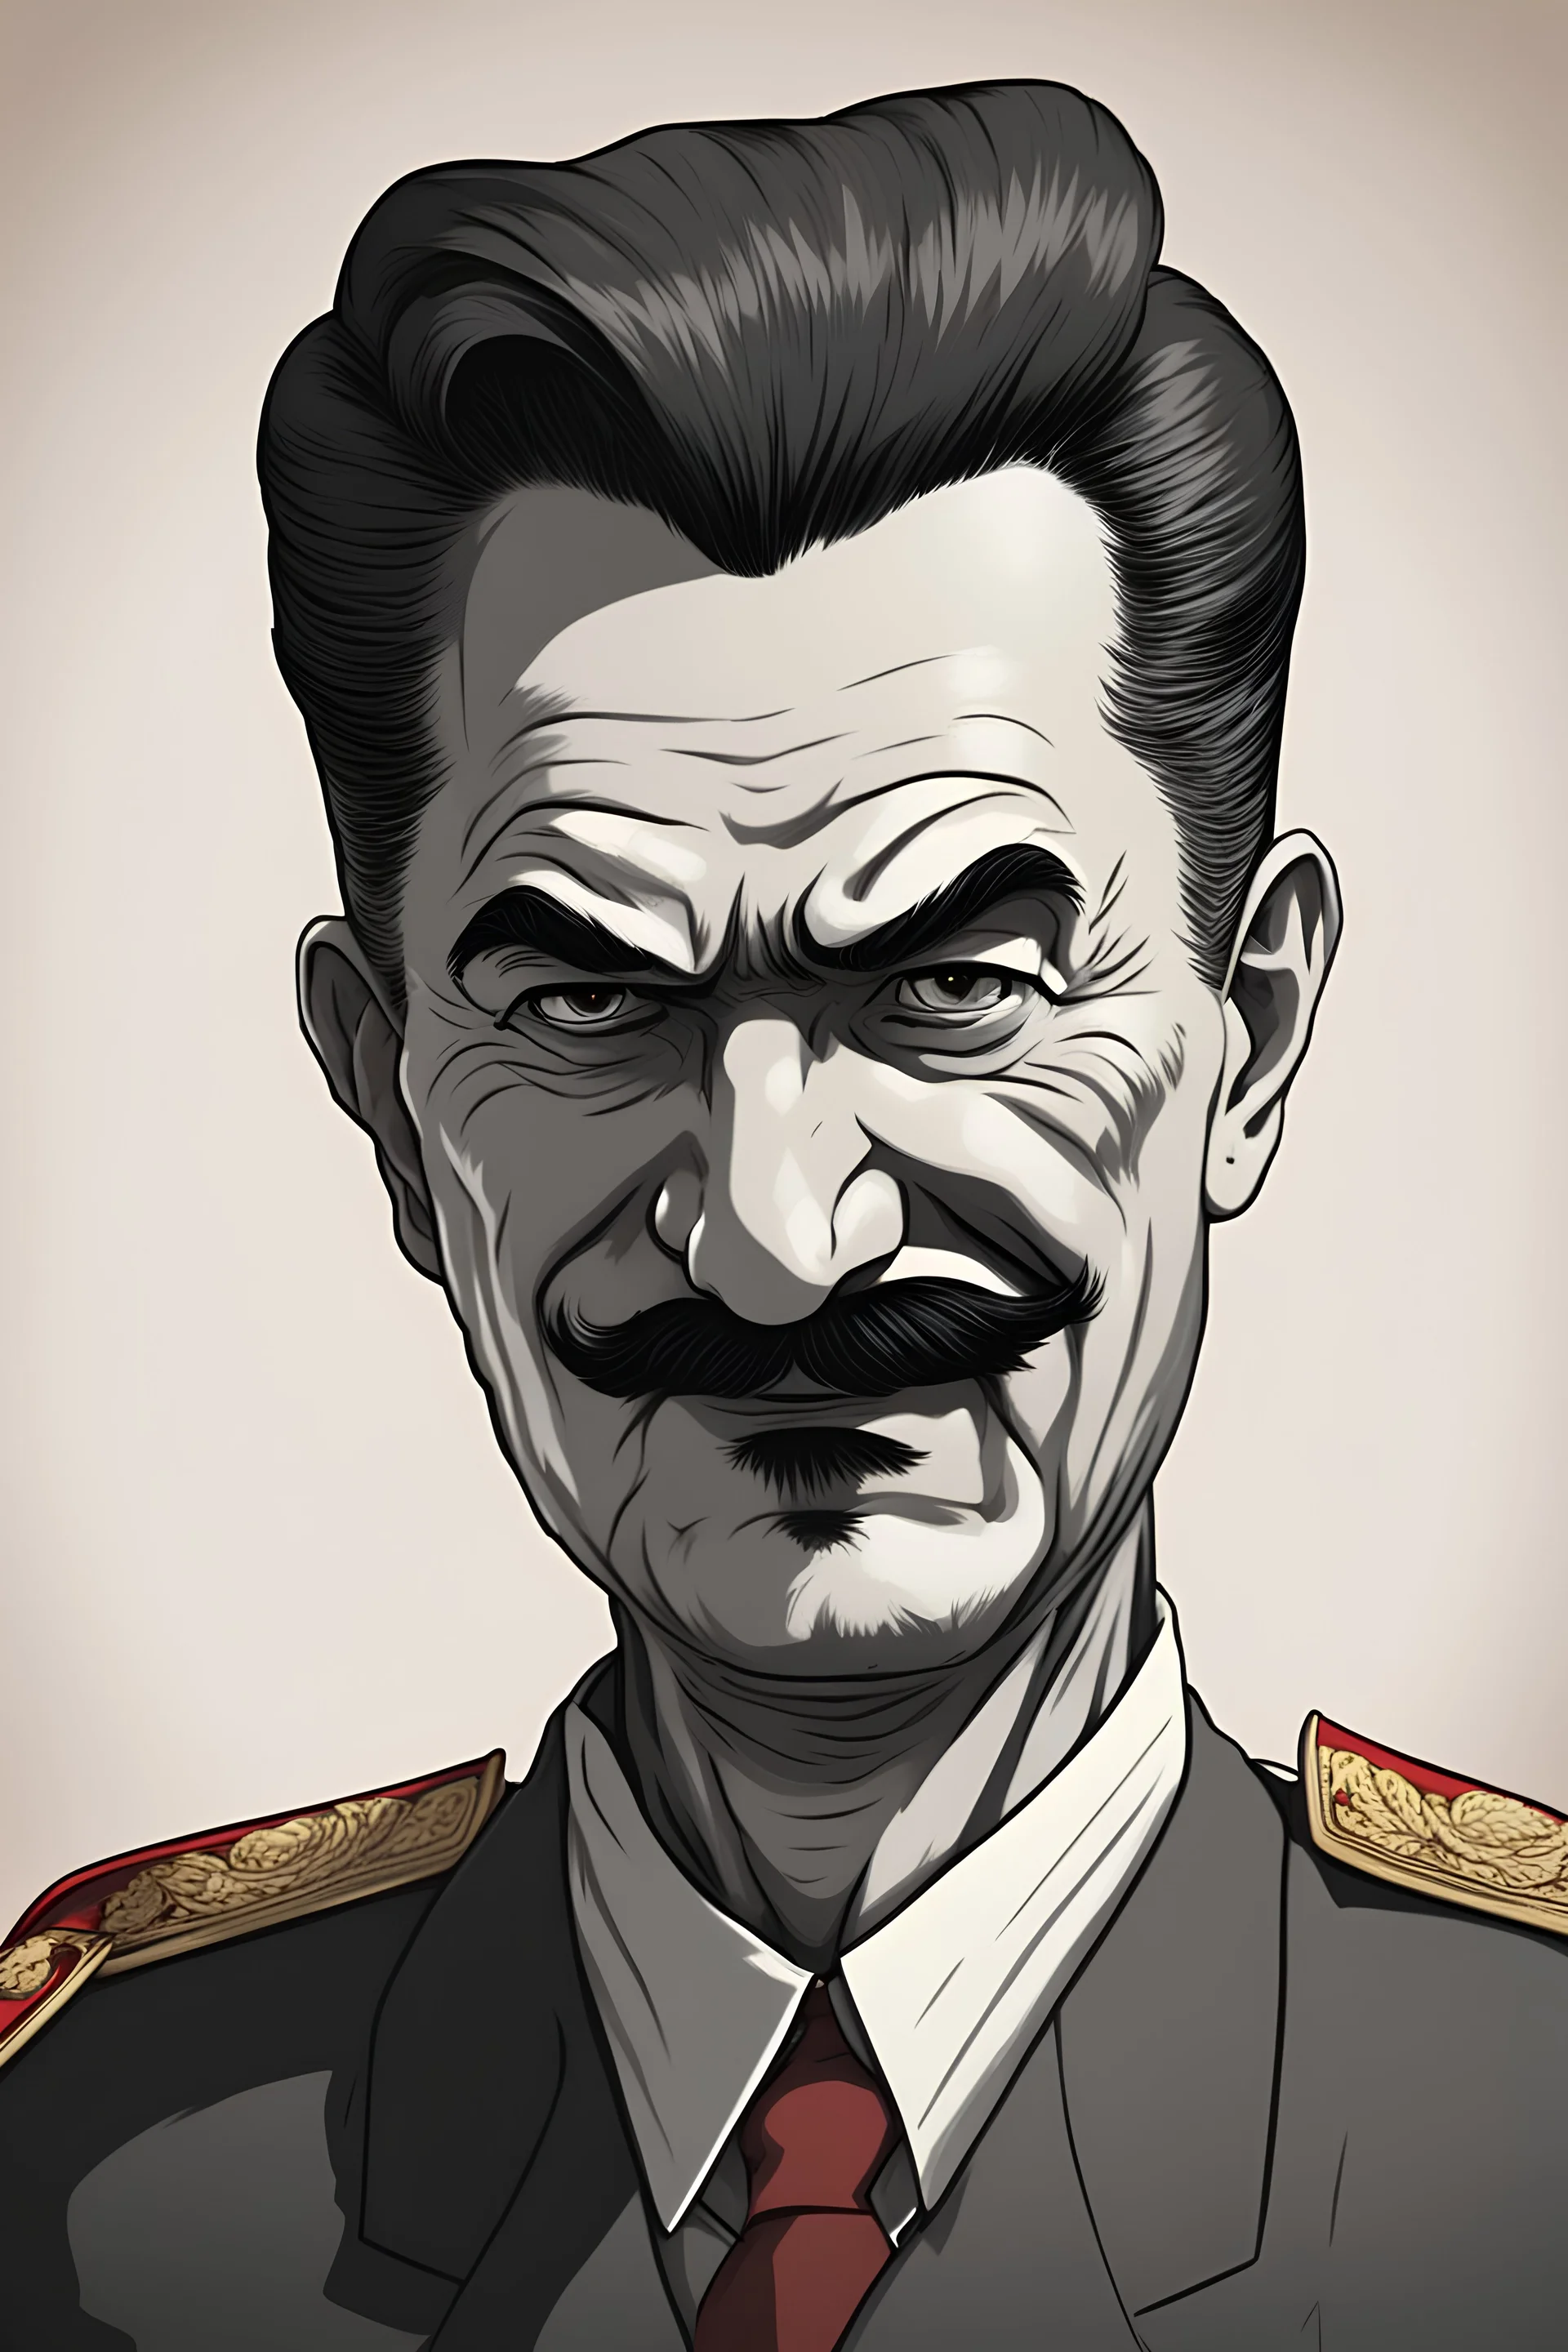 Evil Joseph Stalin in anime style.